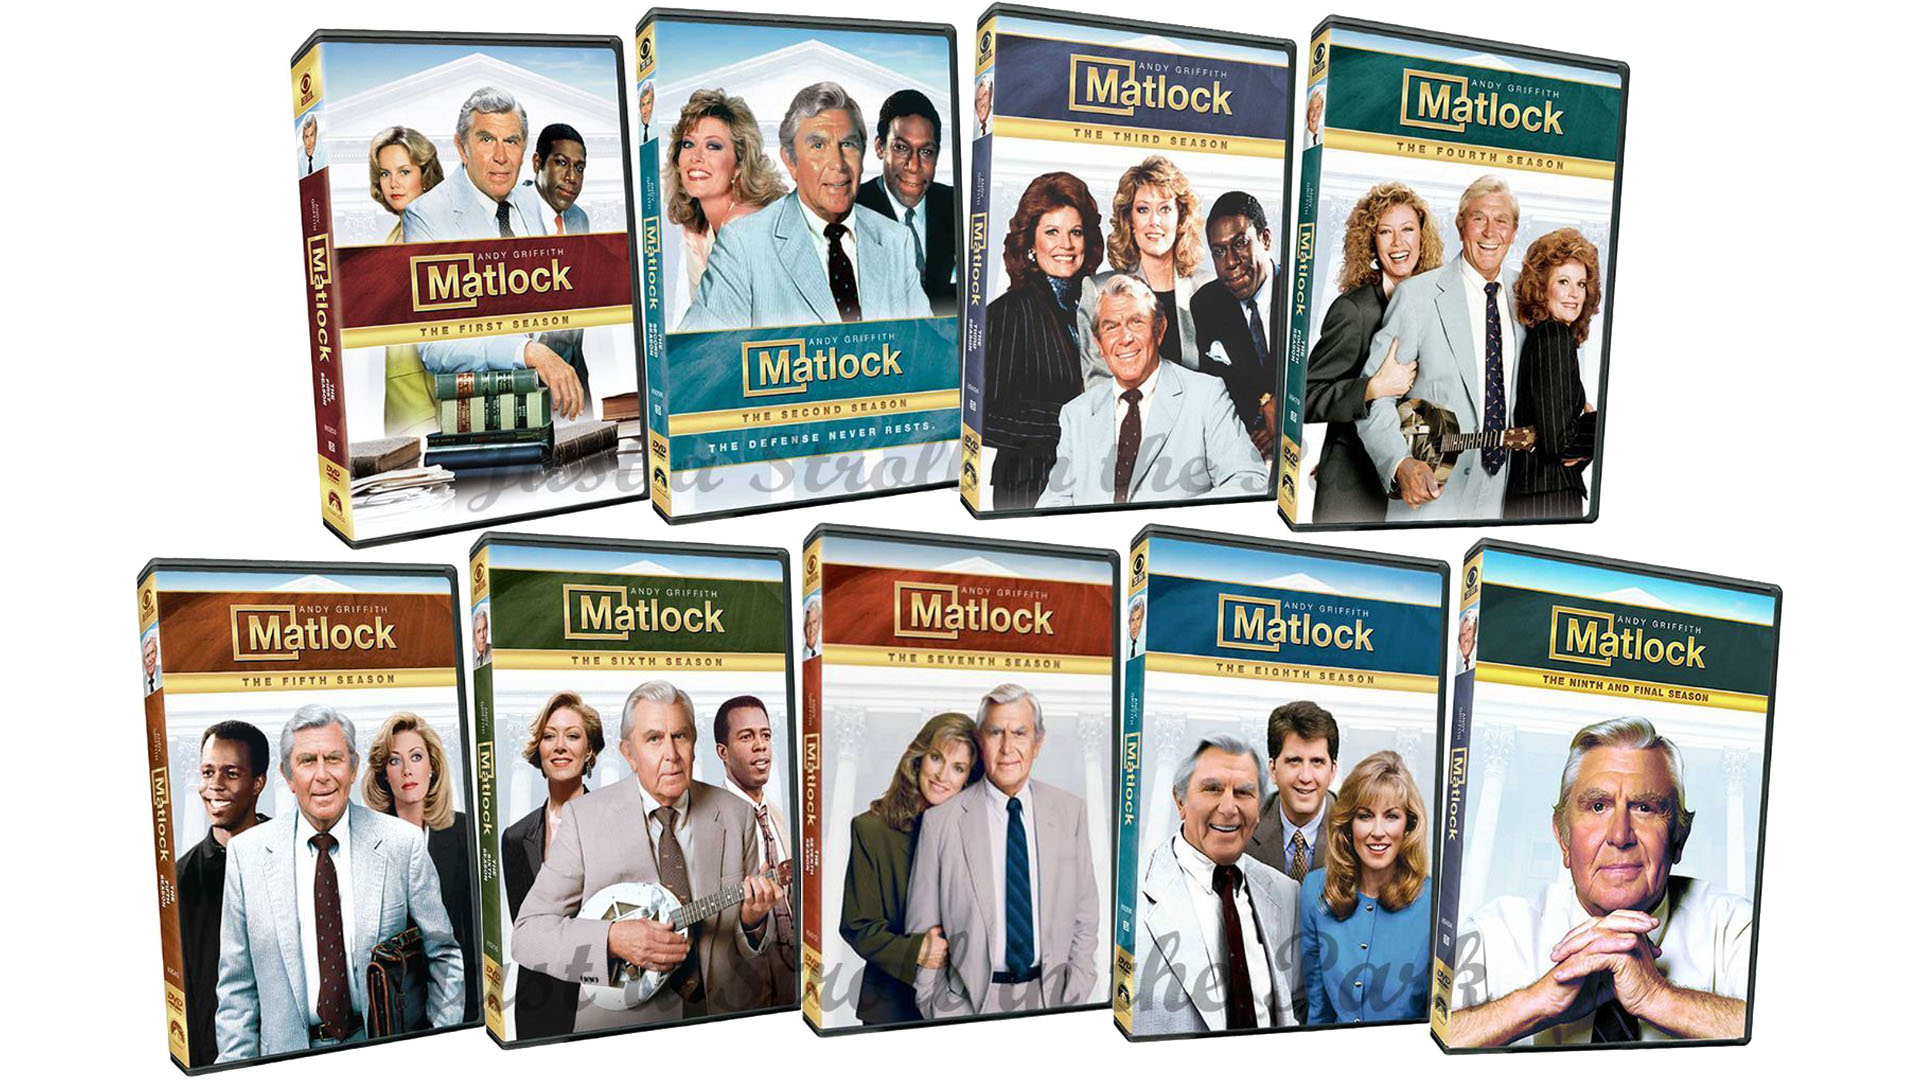 Matlock DVD covers